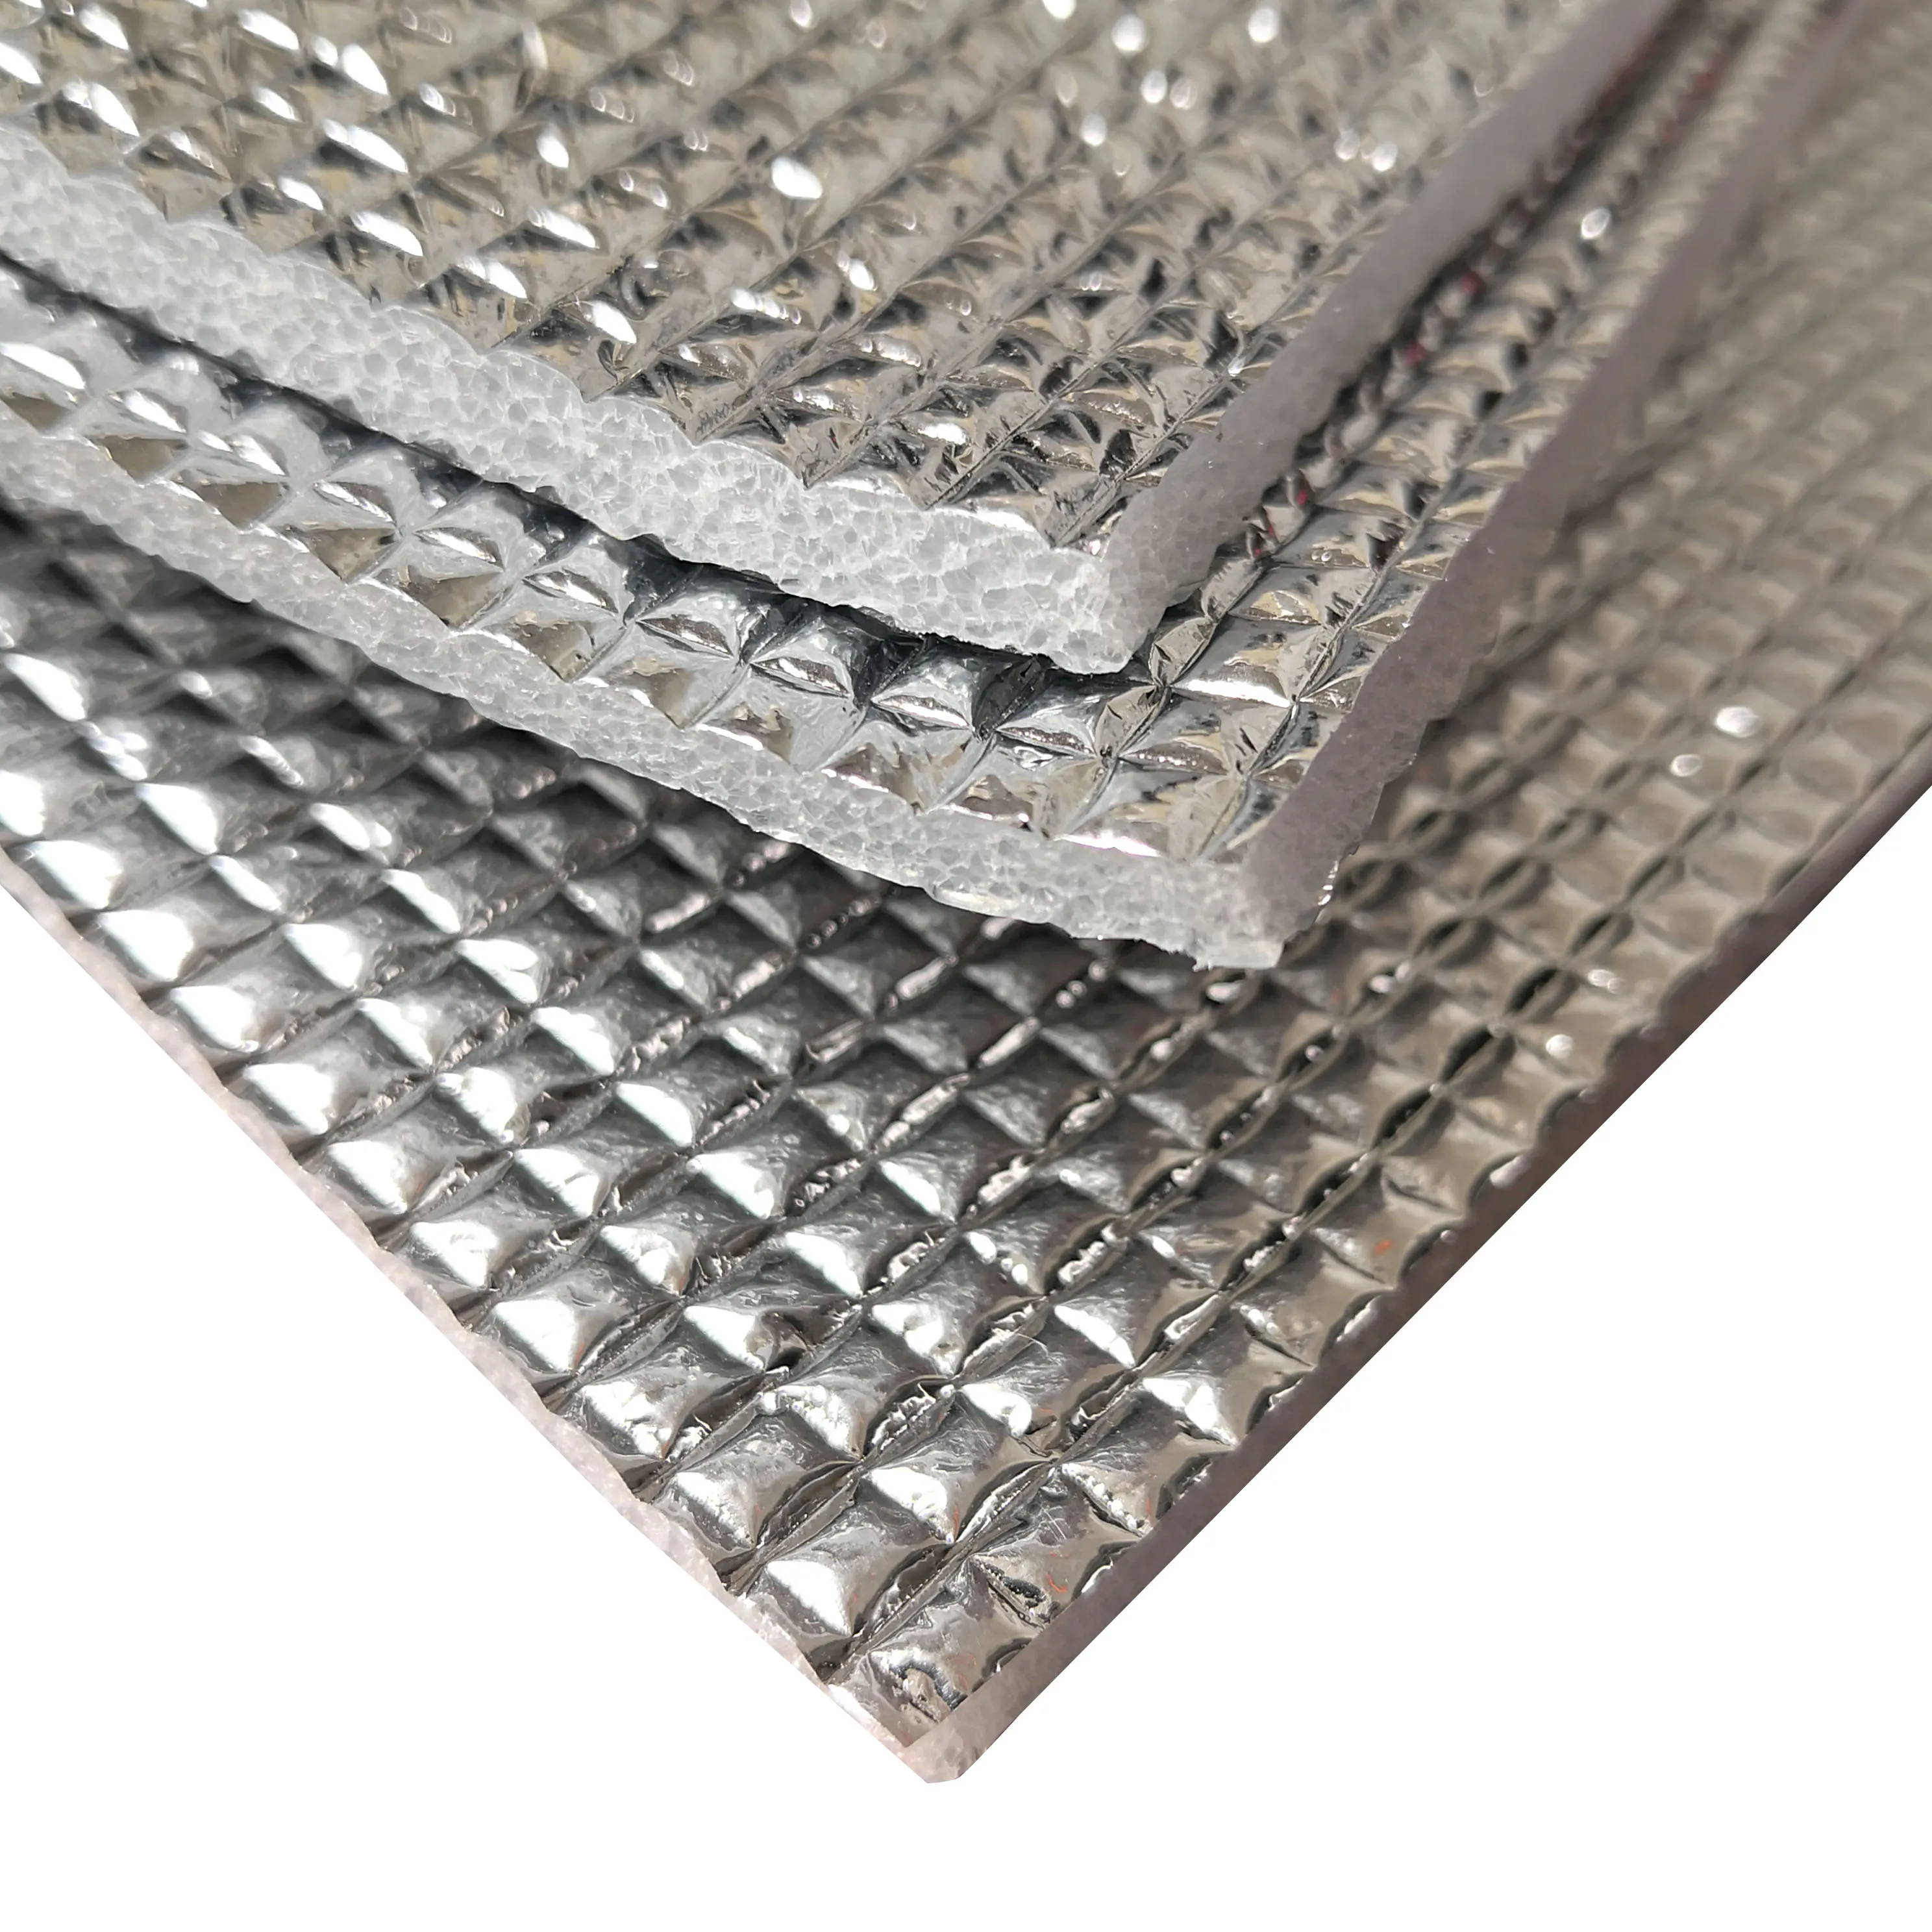 Reflective Foam Insulation Heat Shield Thermal Insulation Shield 48"x25ft R7 